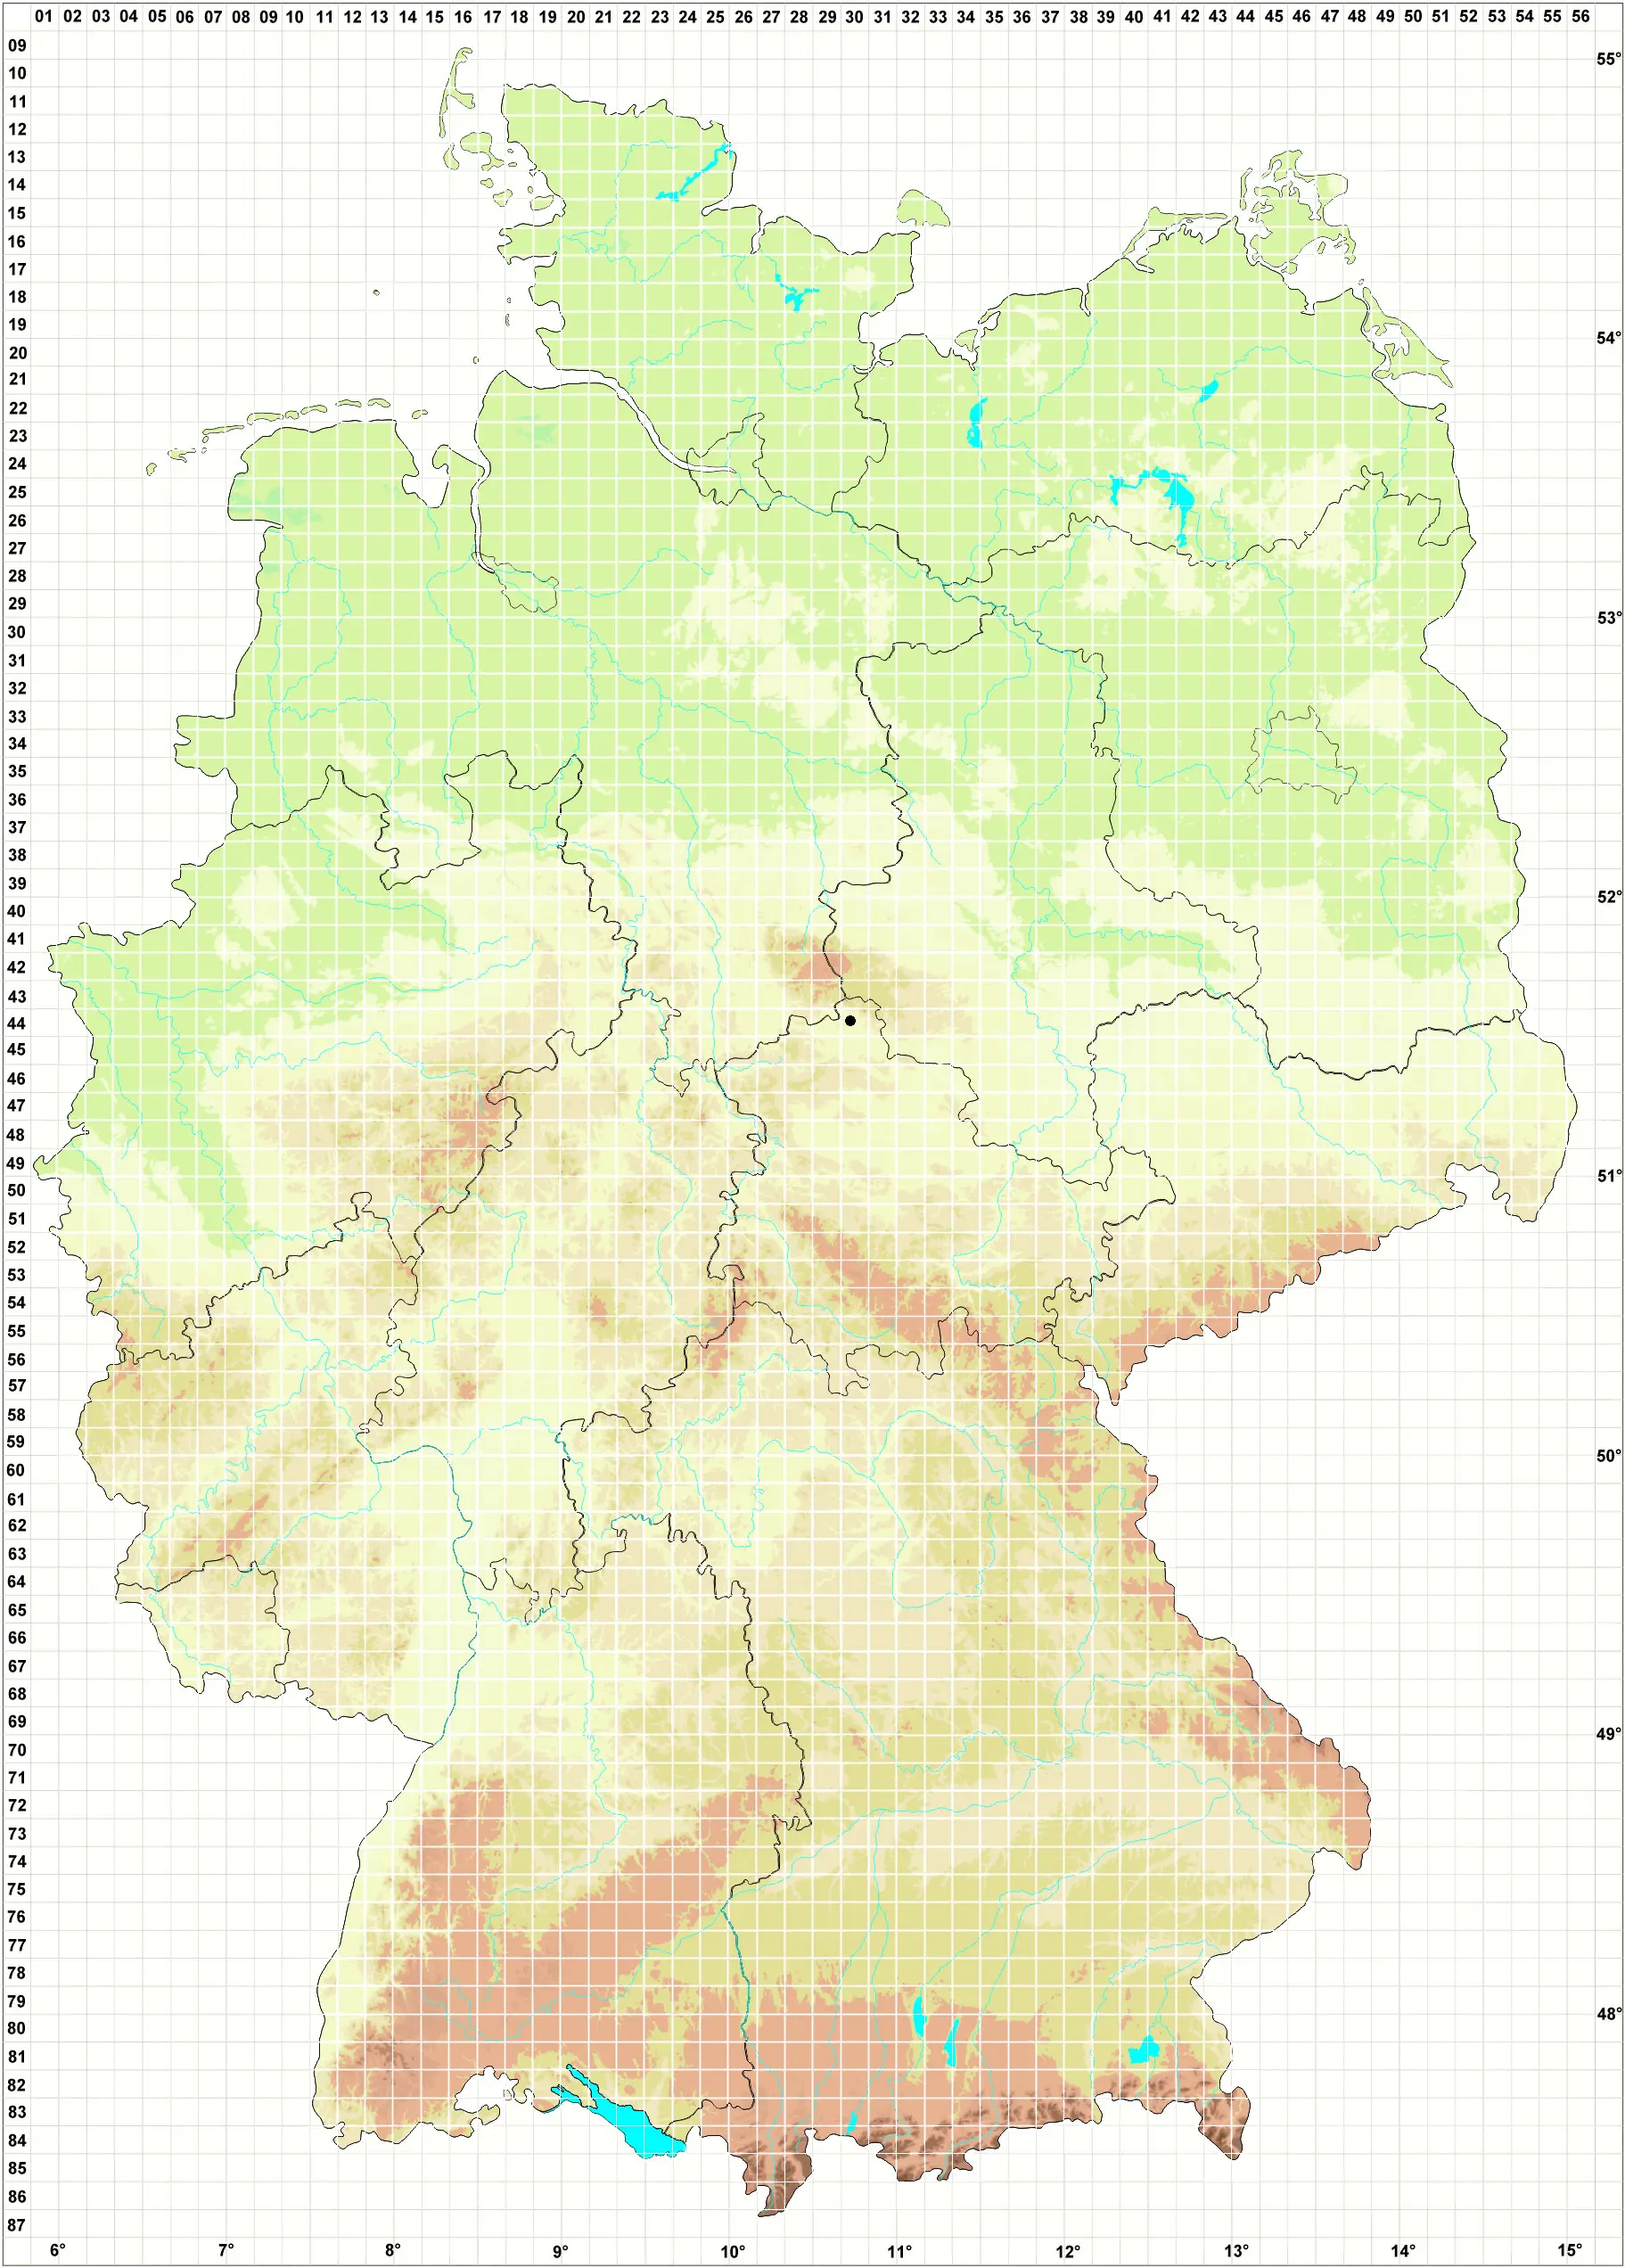 Karte J. Eckstein & M. Burghardt 25.11.2006